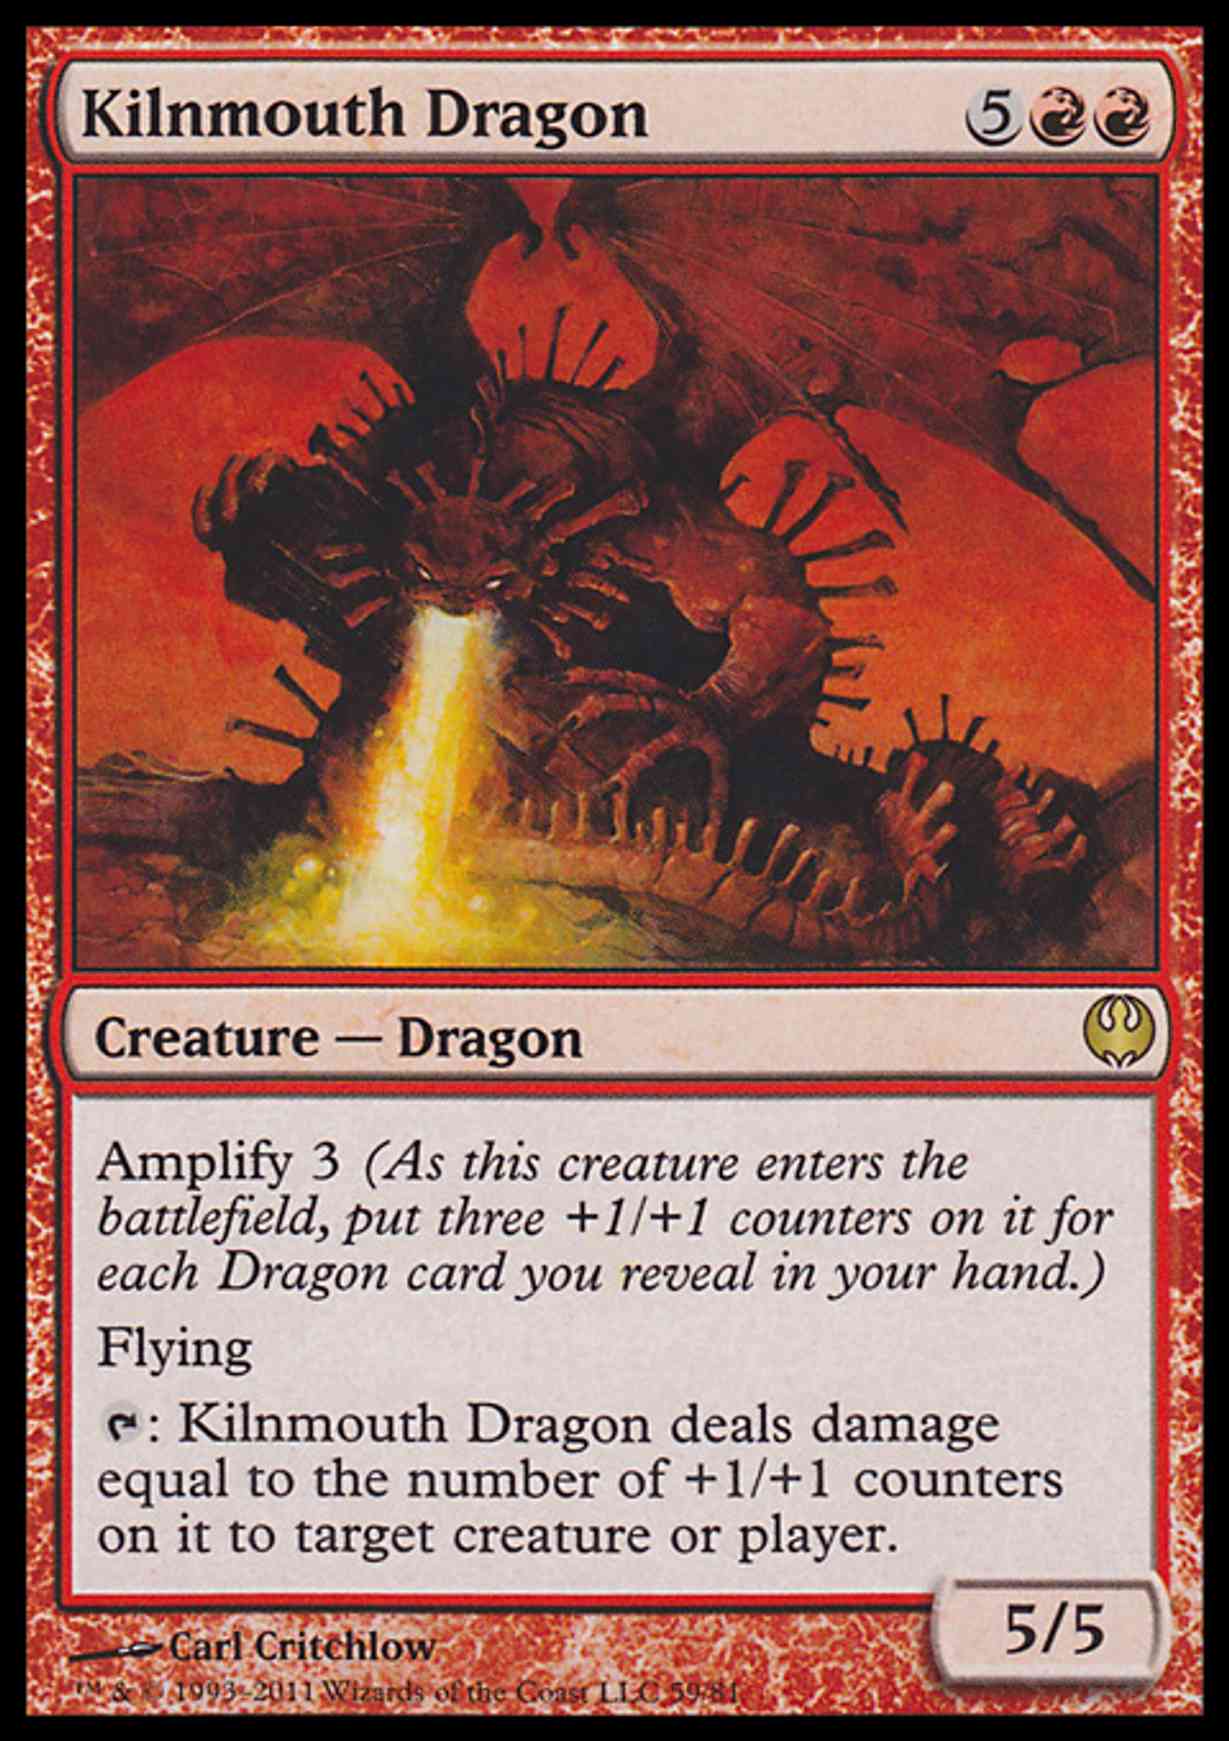 Kilnmouth Dragon magic card front